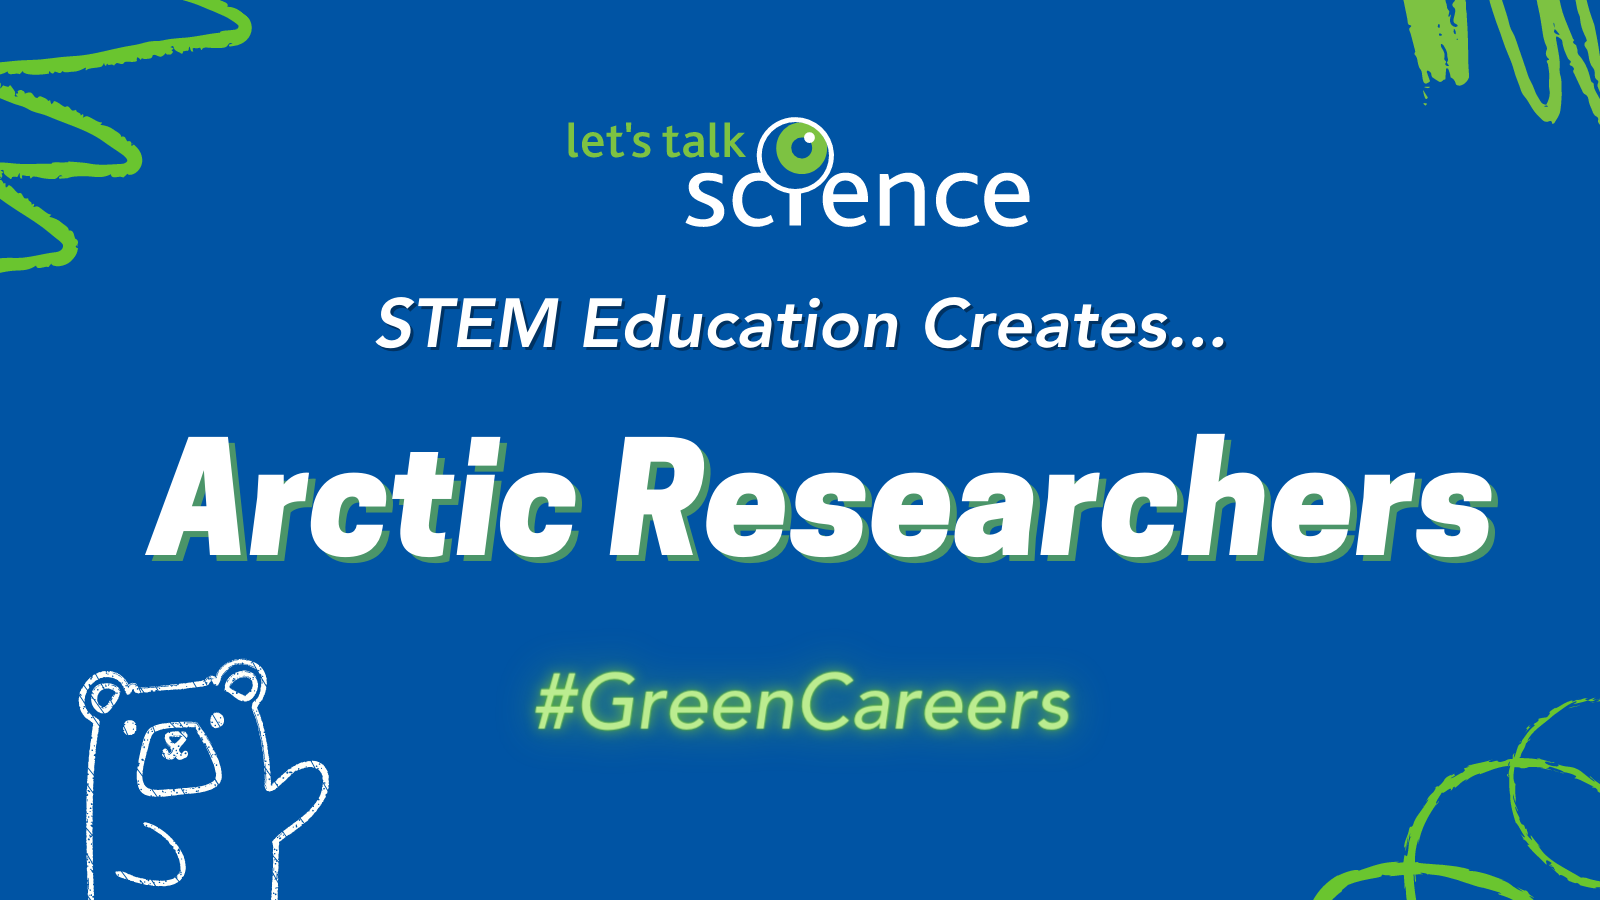 STEM Education Creates... Arctic Researchers #GreenCareers